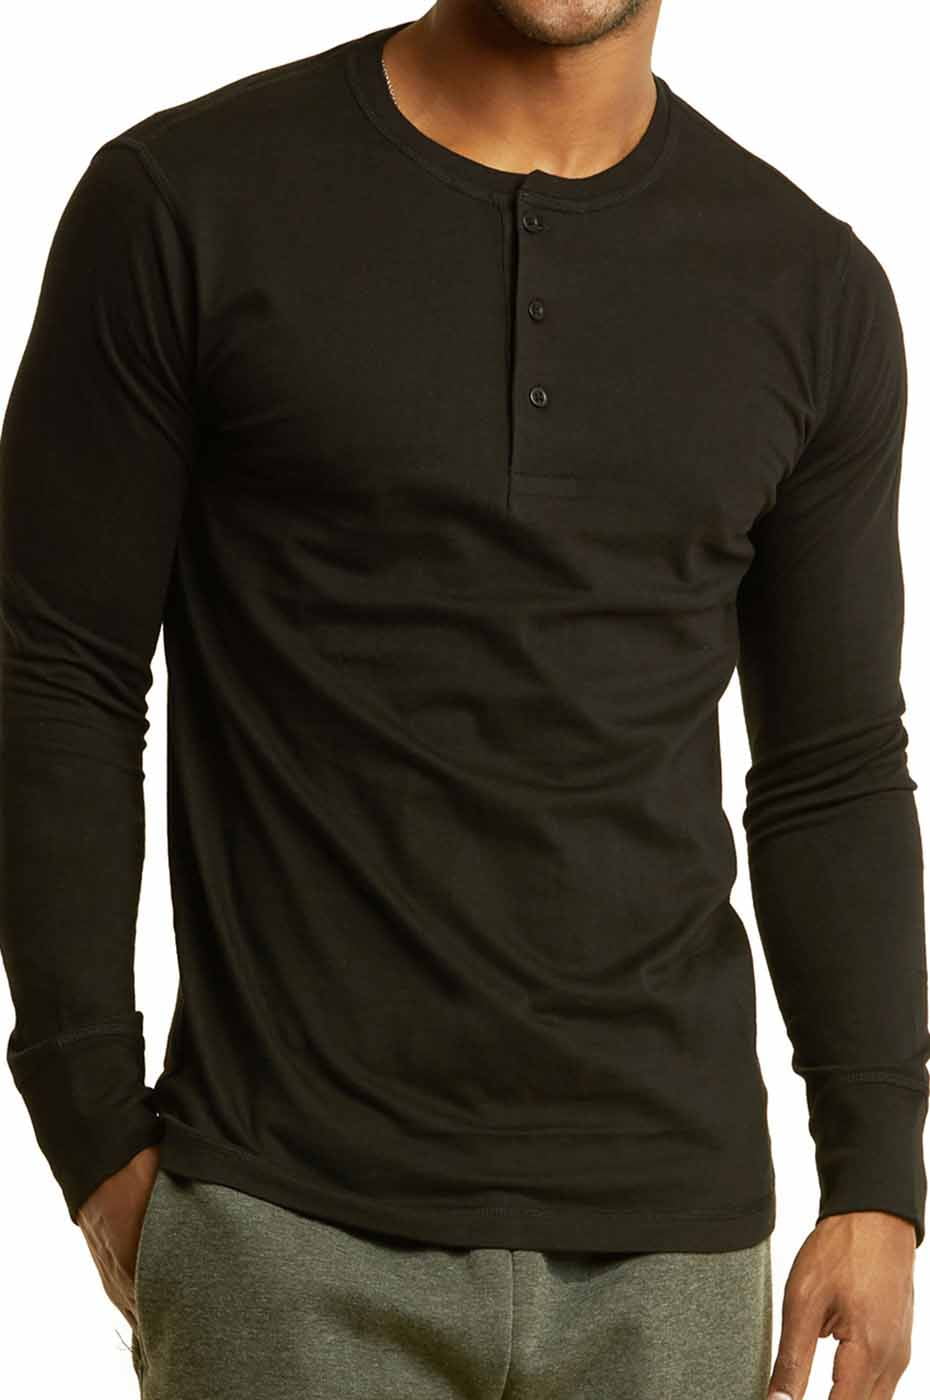 Men's Henley 3-Button Pullover Cotton T-Shirt Long Sleeve Crew Neck ...